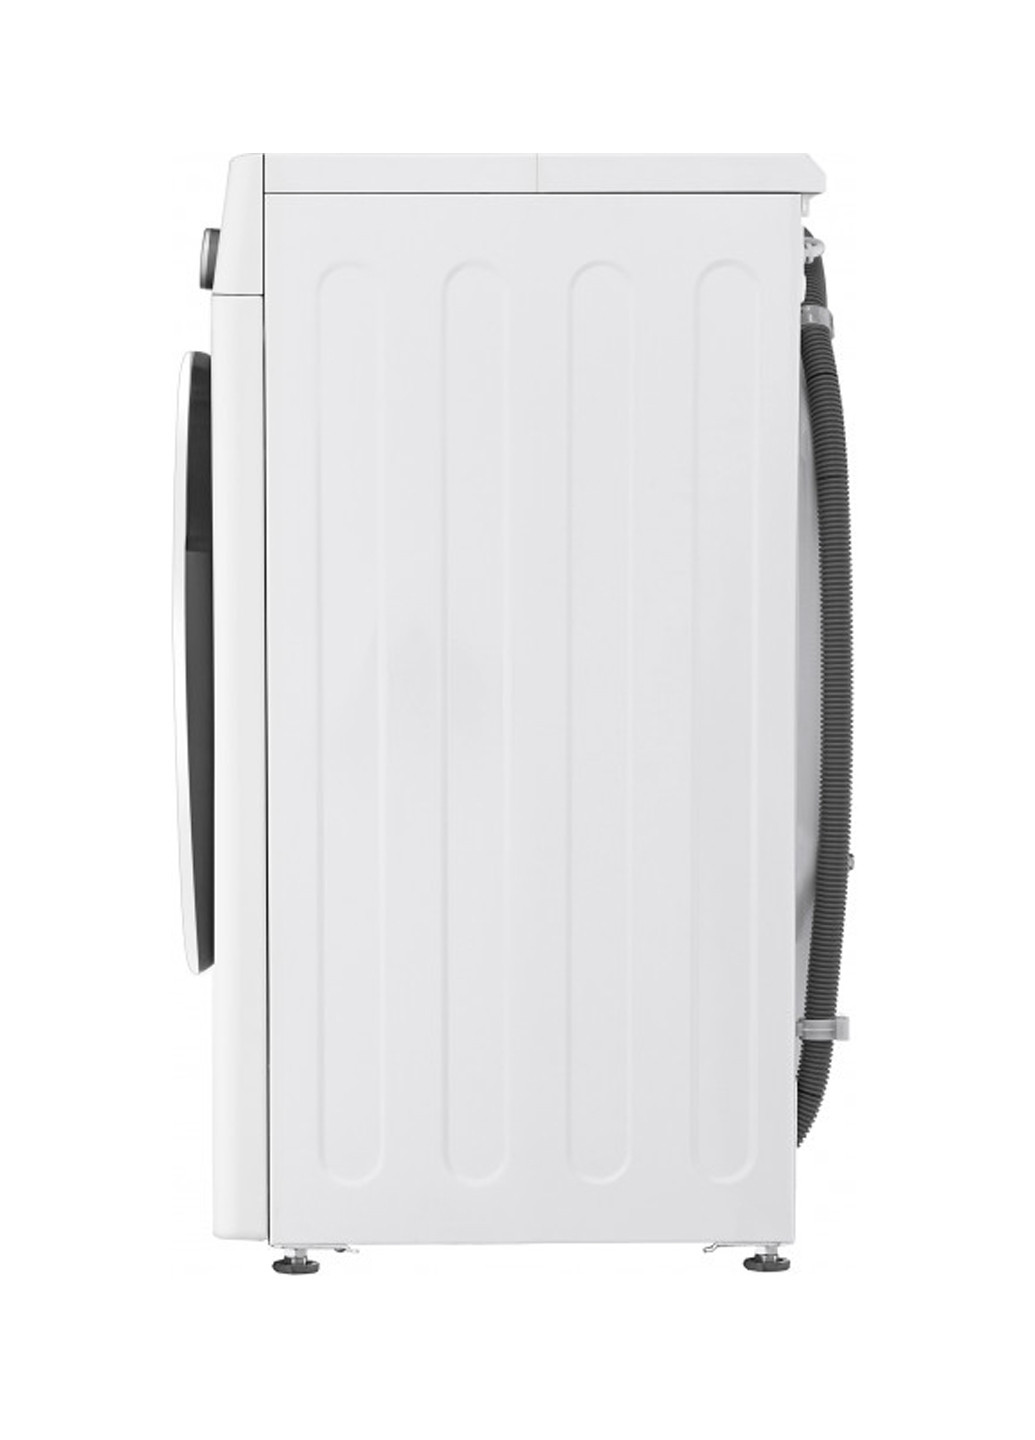 Стиральная машина LG F2R5WS0W белая